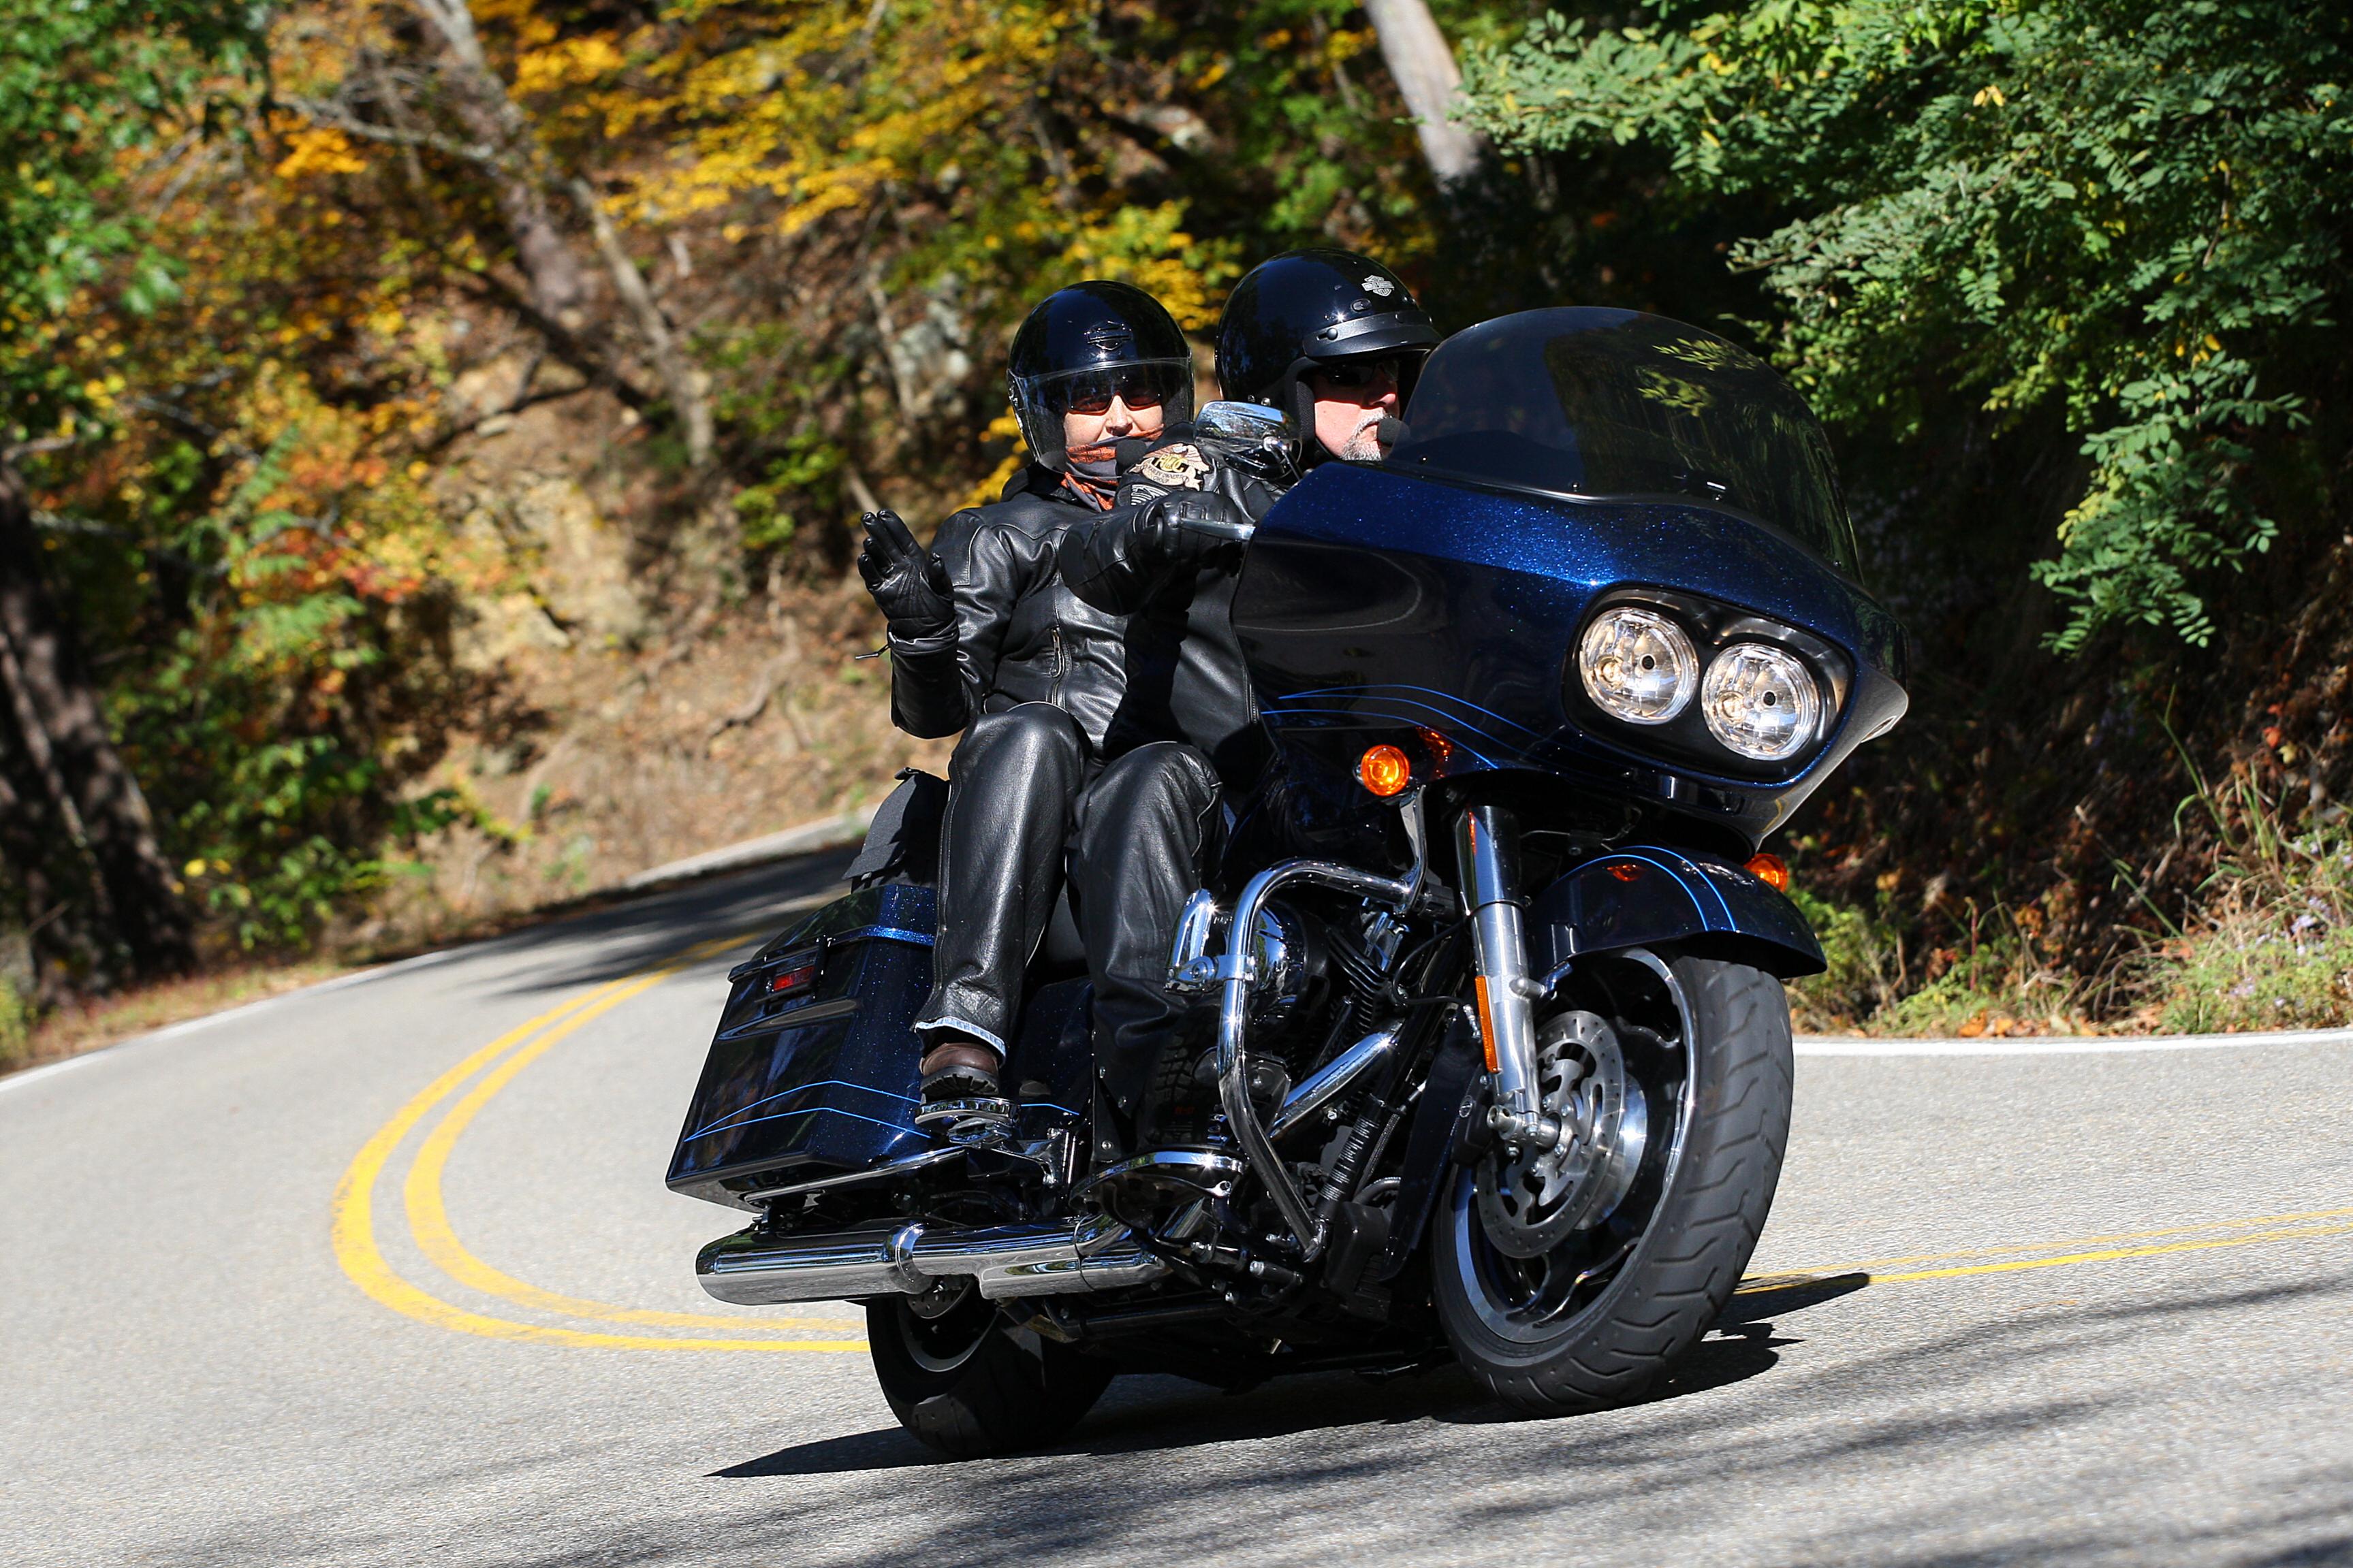 Dragon Photos - Page 3 - Harley Davidson Forums